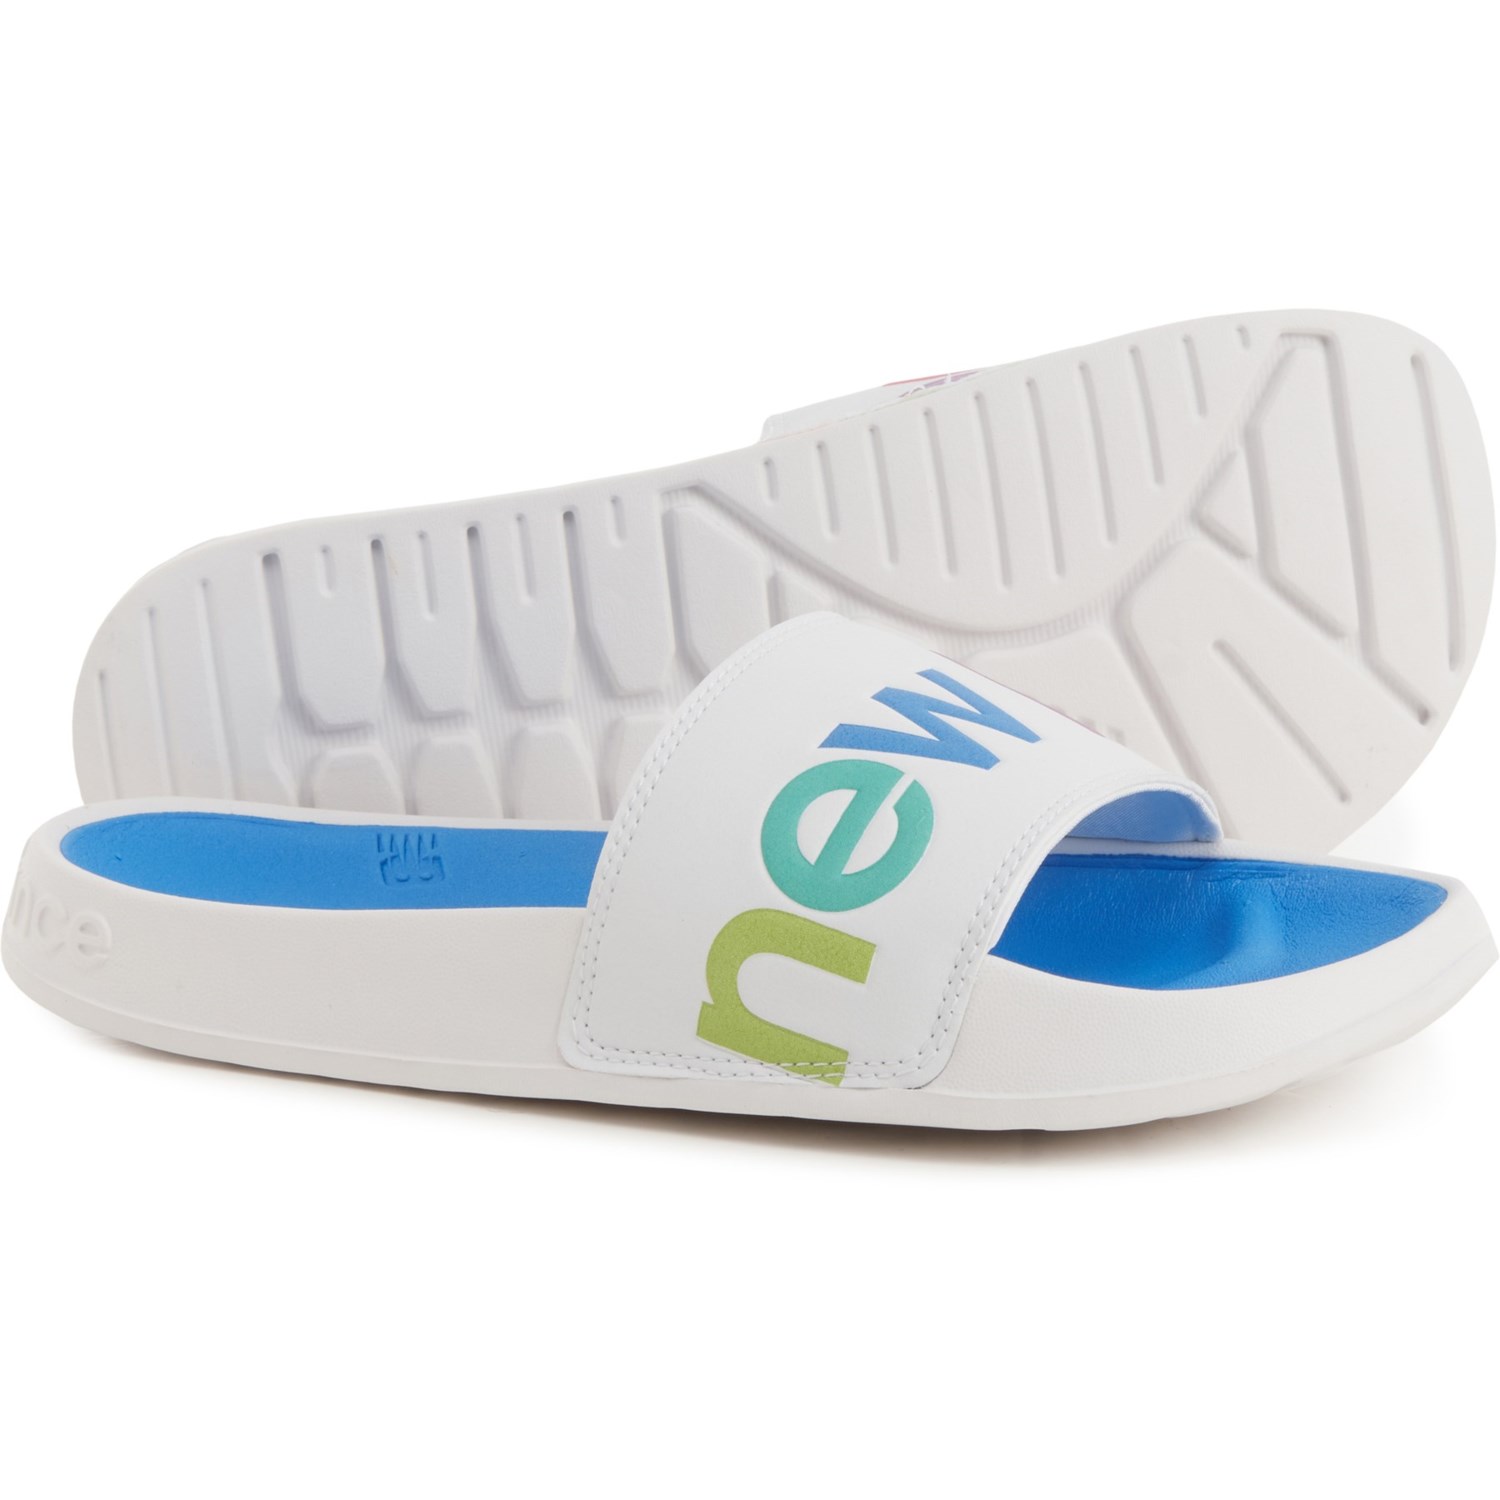 New Balance Sport Slide Sandals (For Women)